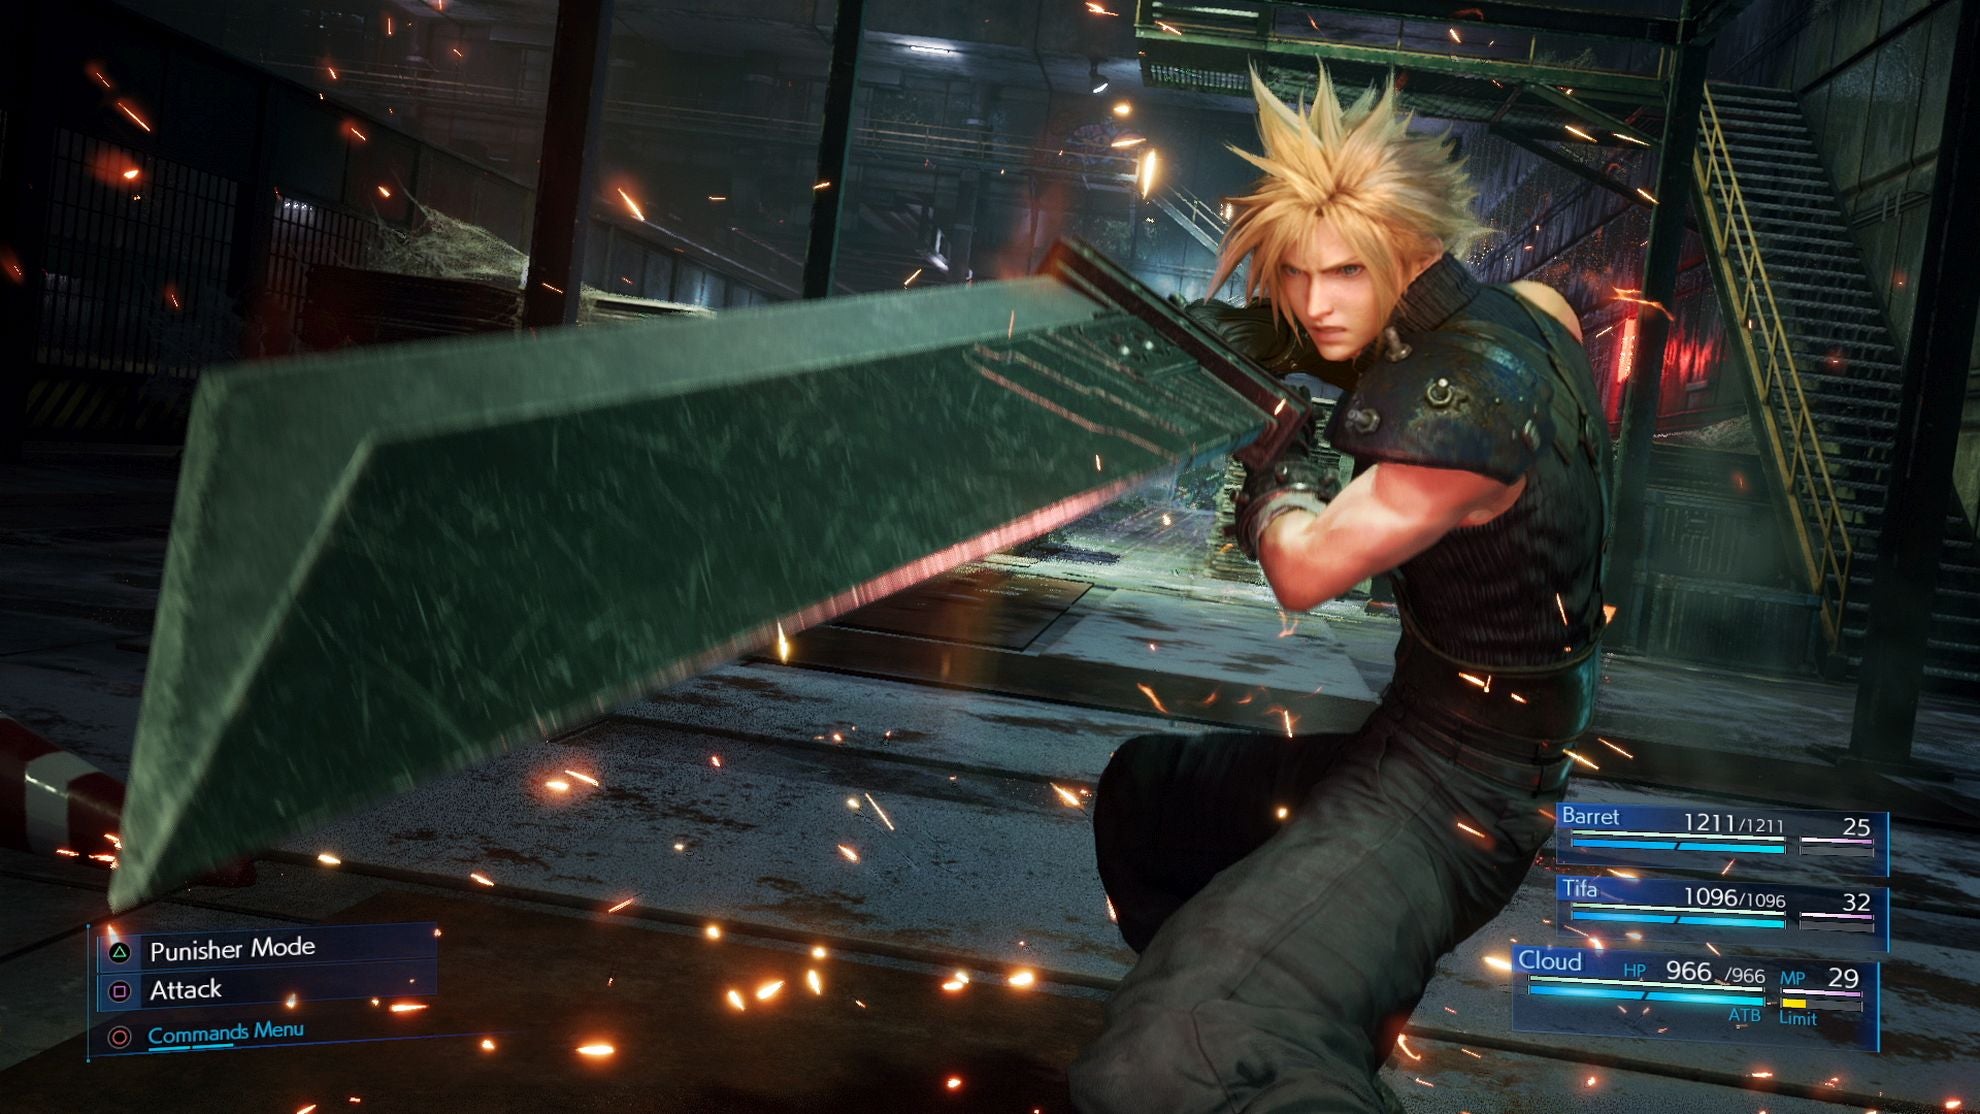 Image for E3 2019 Game Critics Awards - Final Fantasy 7 Remake wins Best of Show